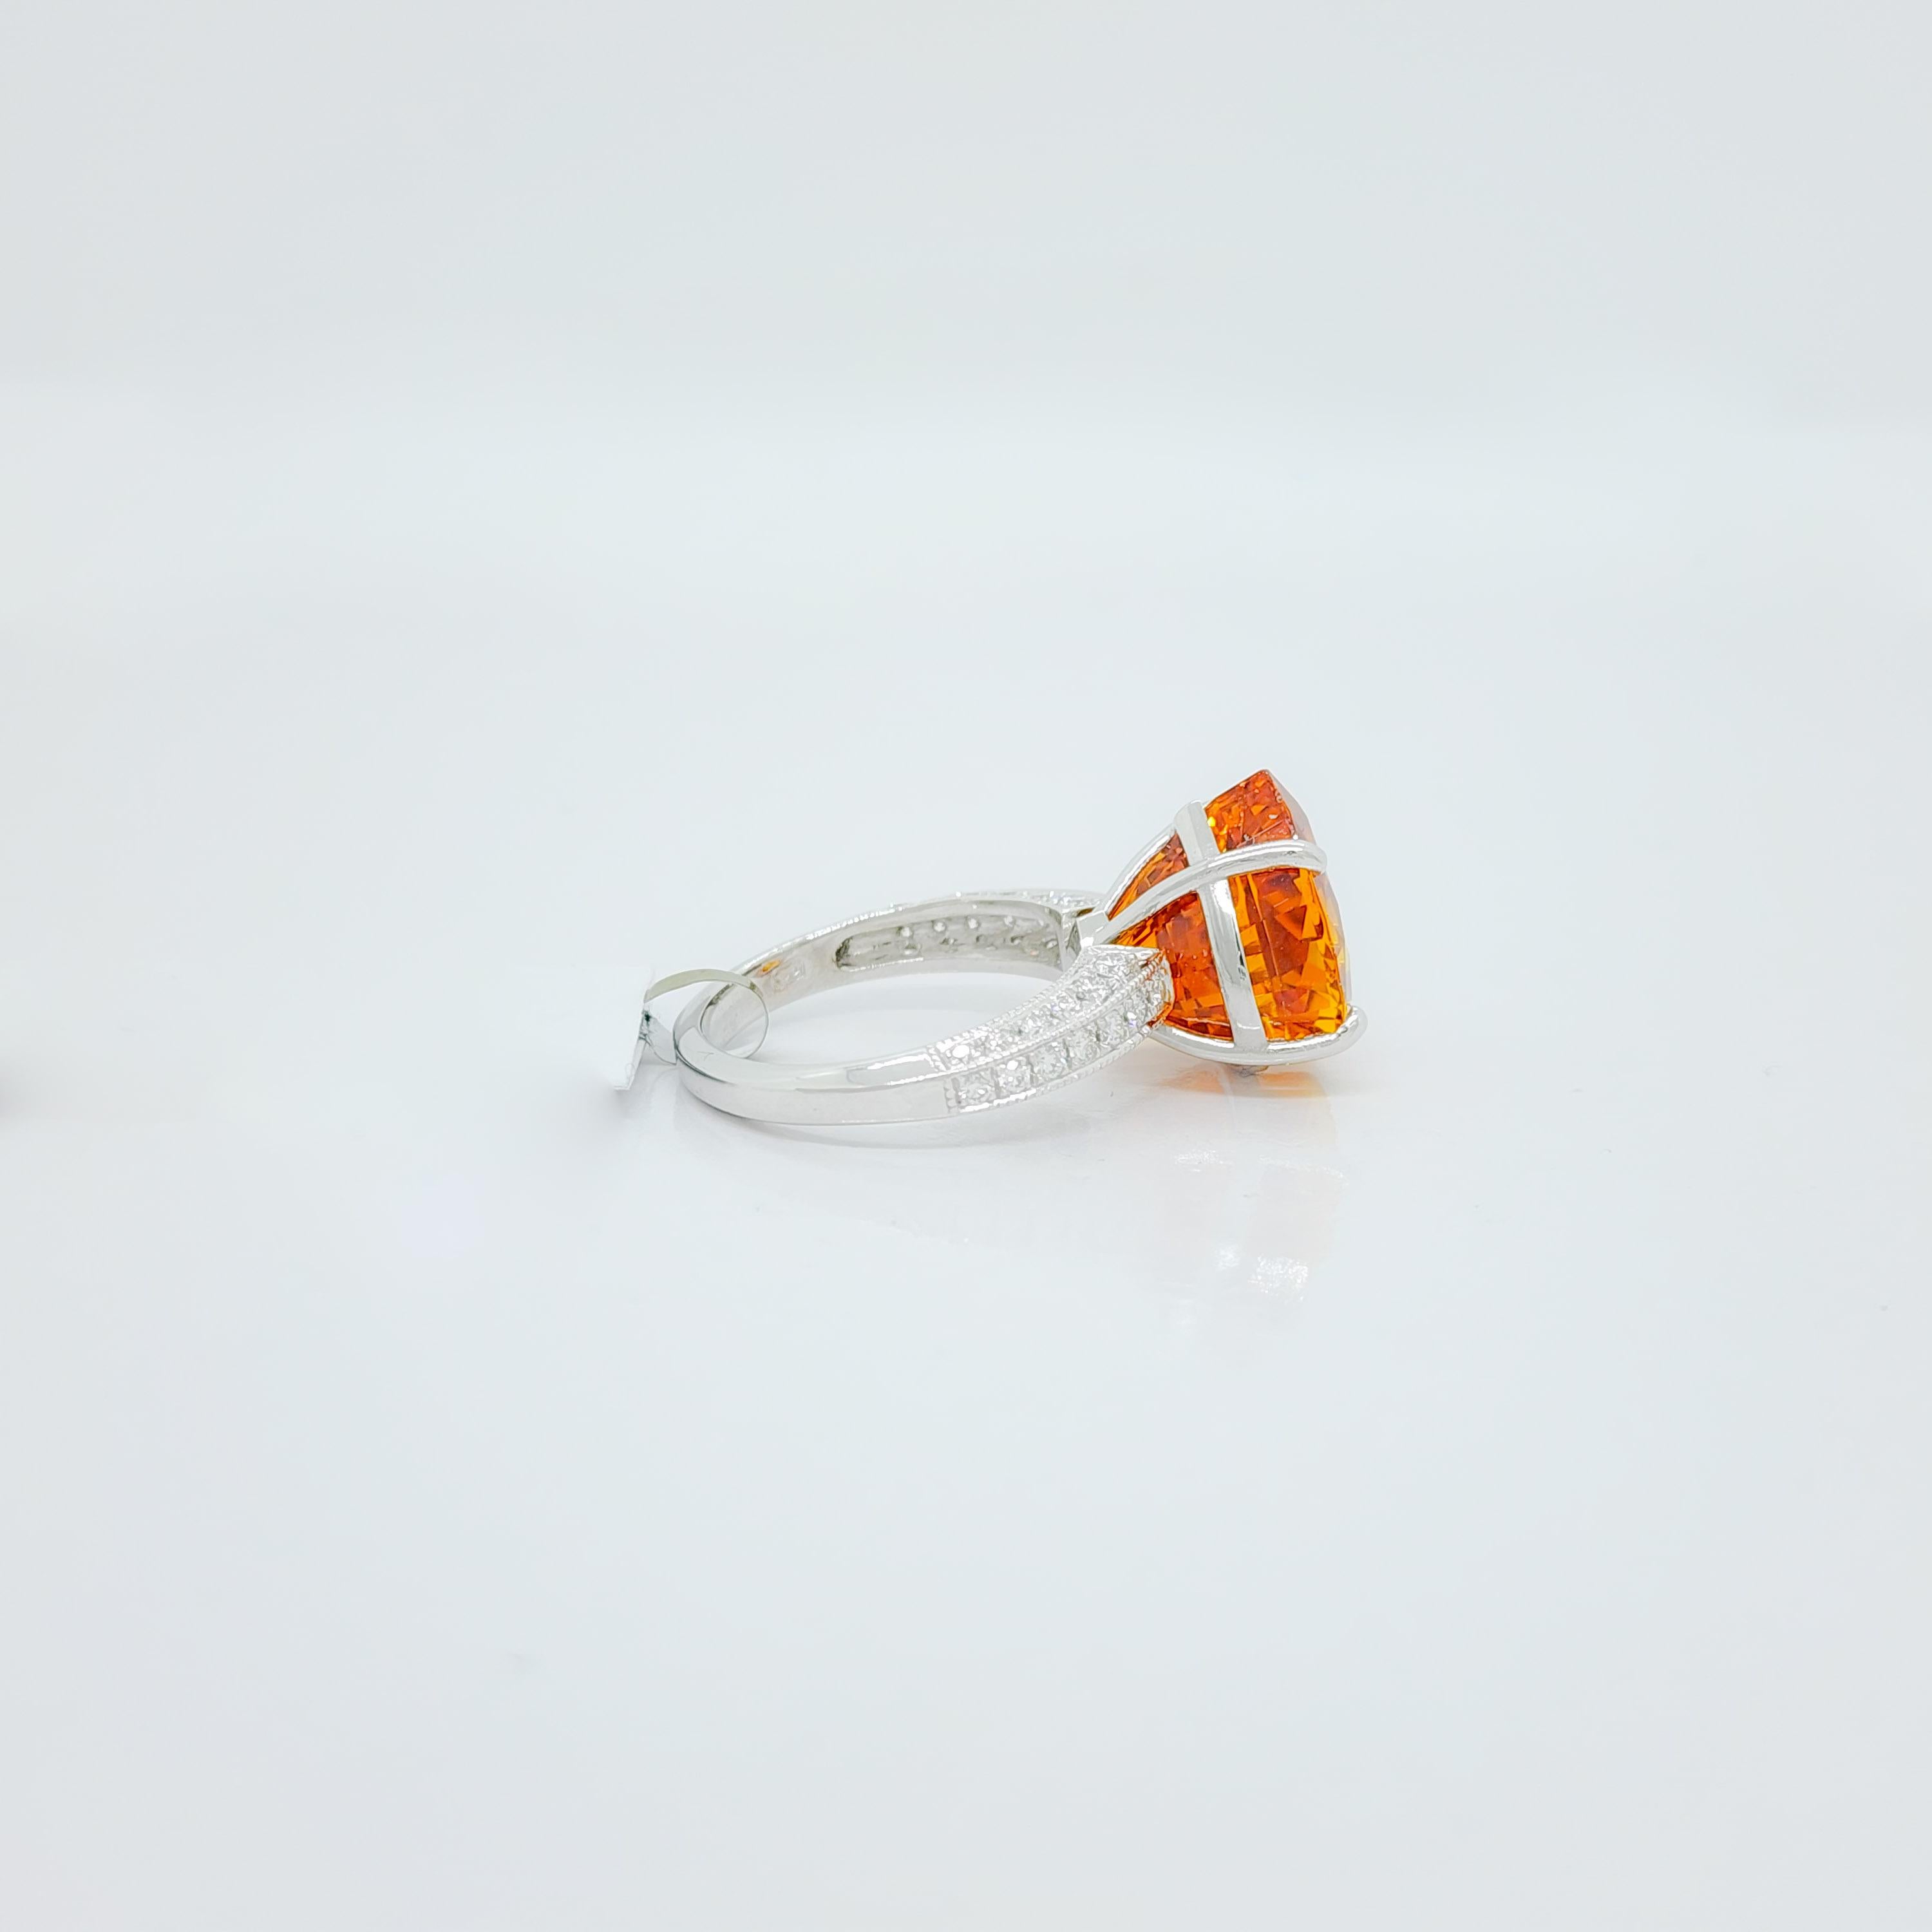 Women's or Men's GIA Orange Sapphire Pear Shape and White Diamond Cocktail Ring in Platinum